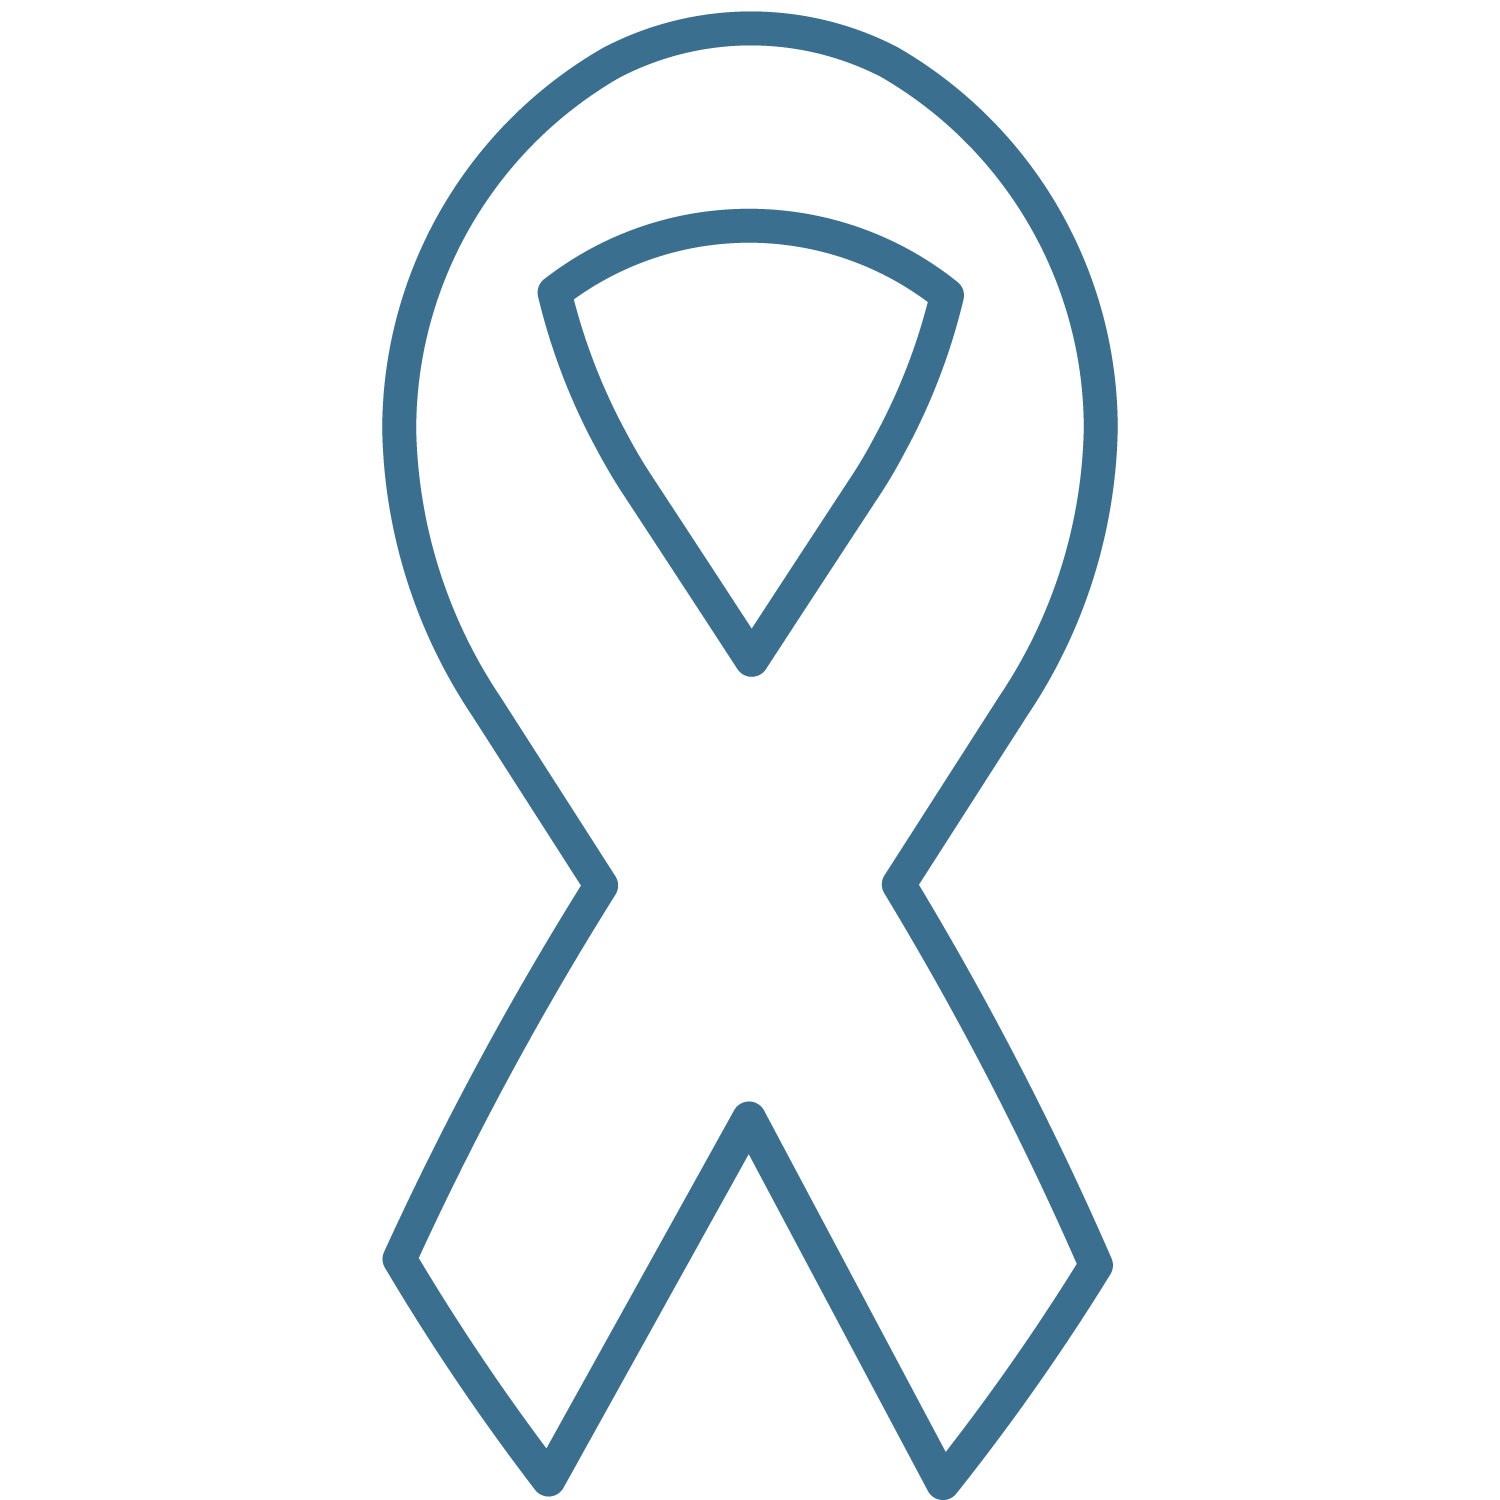 Cancer Awareness Ribbon Clipart